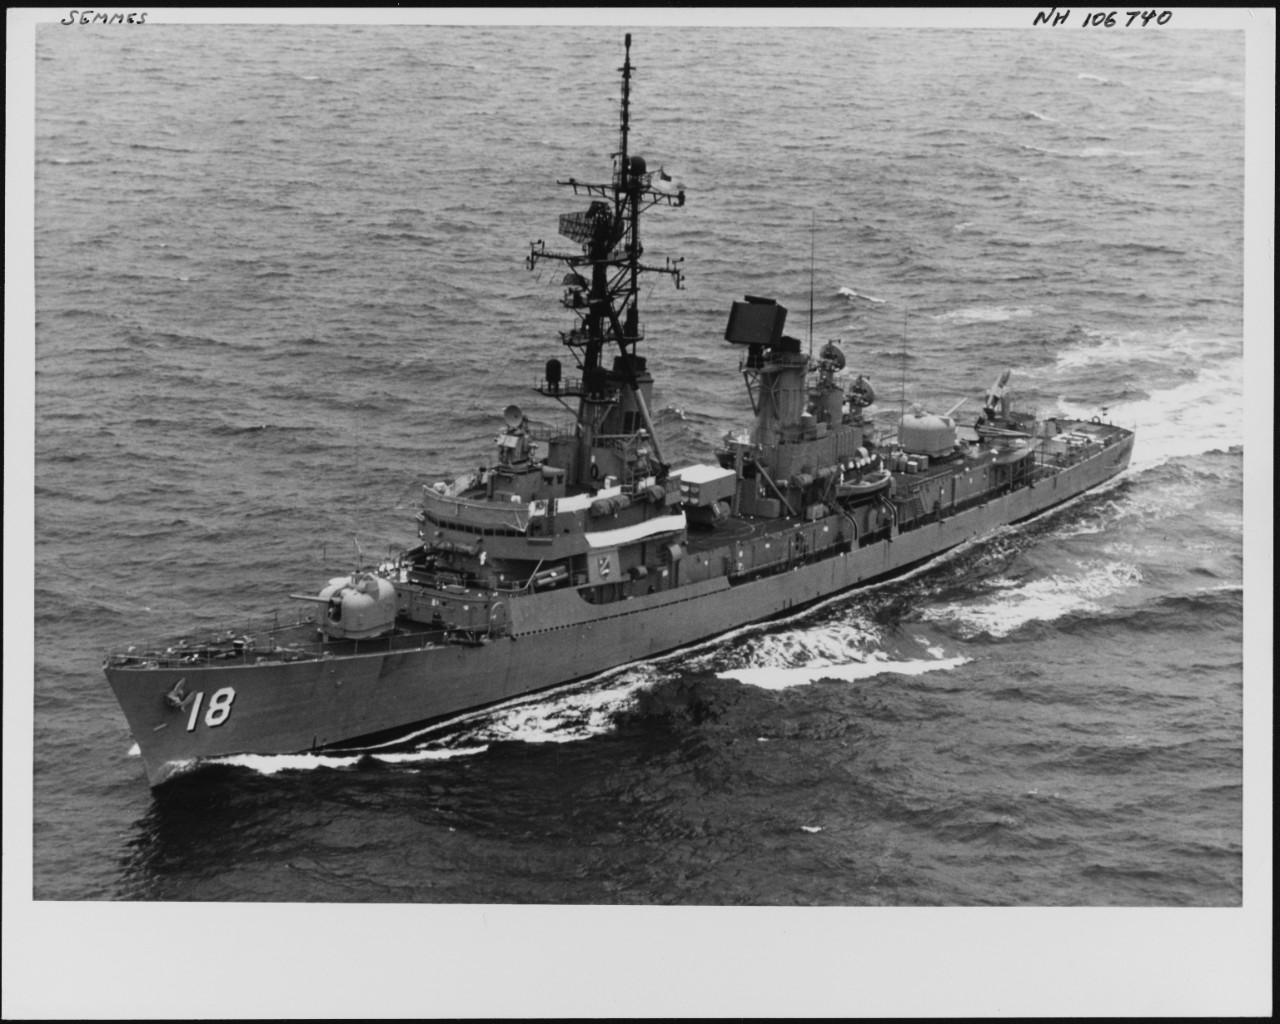 Photo # NH 106740  USS Semmes